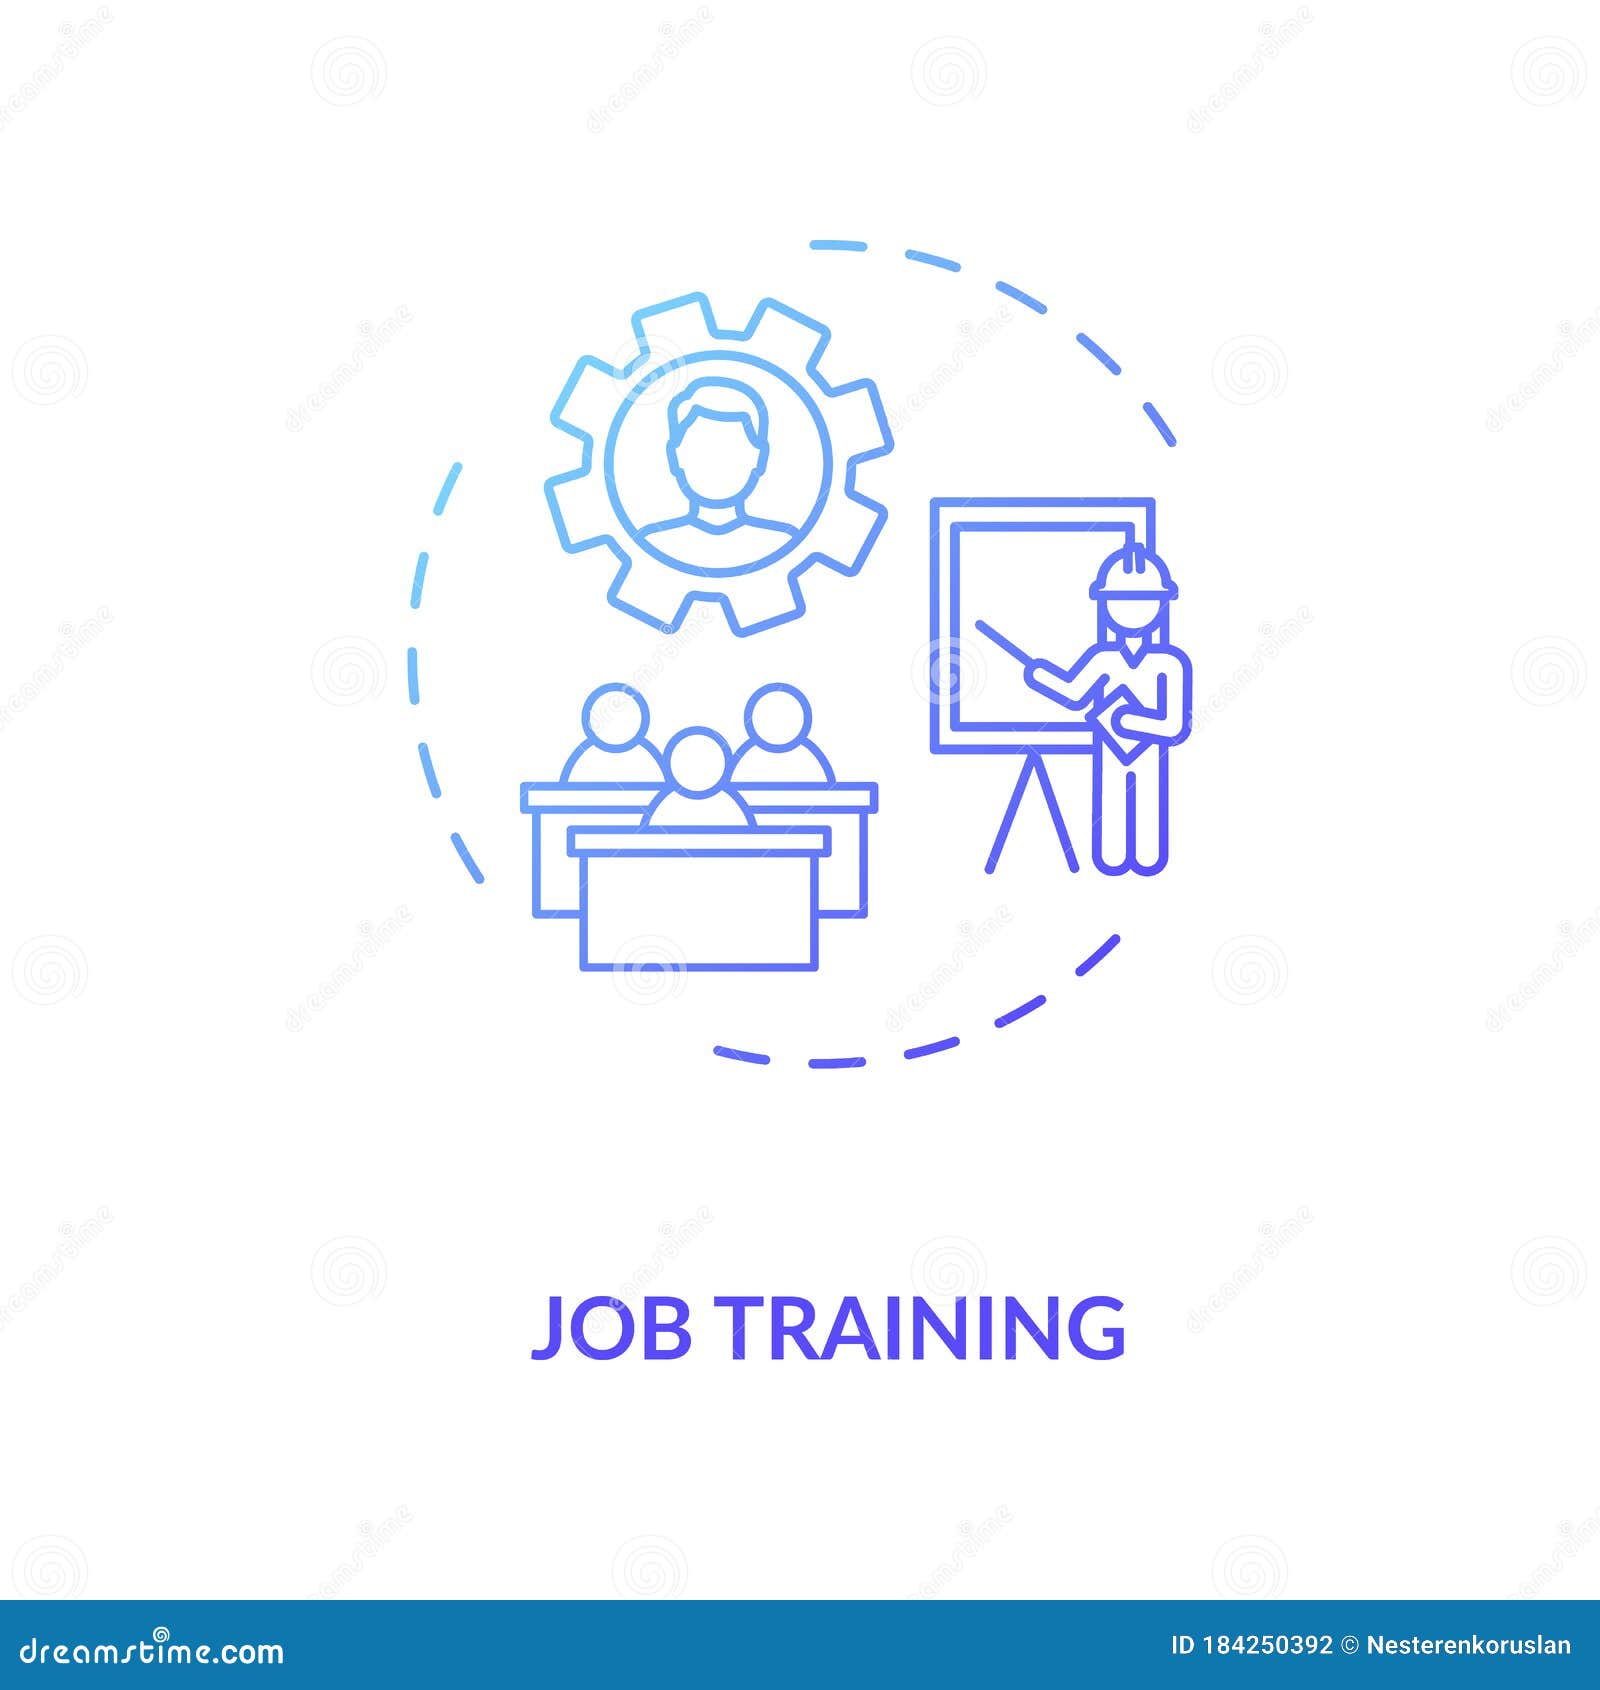 Job training concept icon stock vector. Illustration of gradient